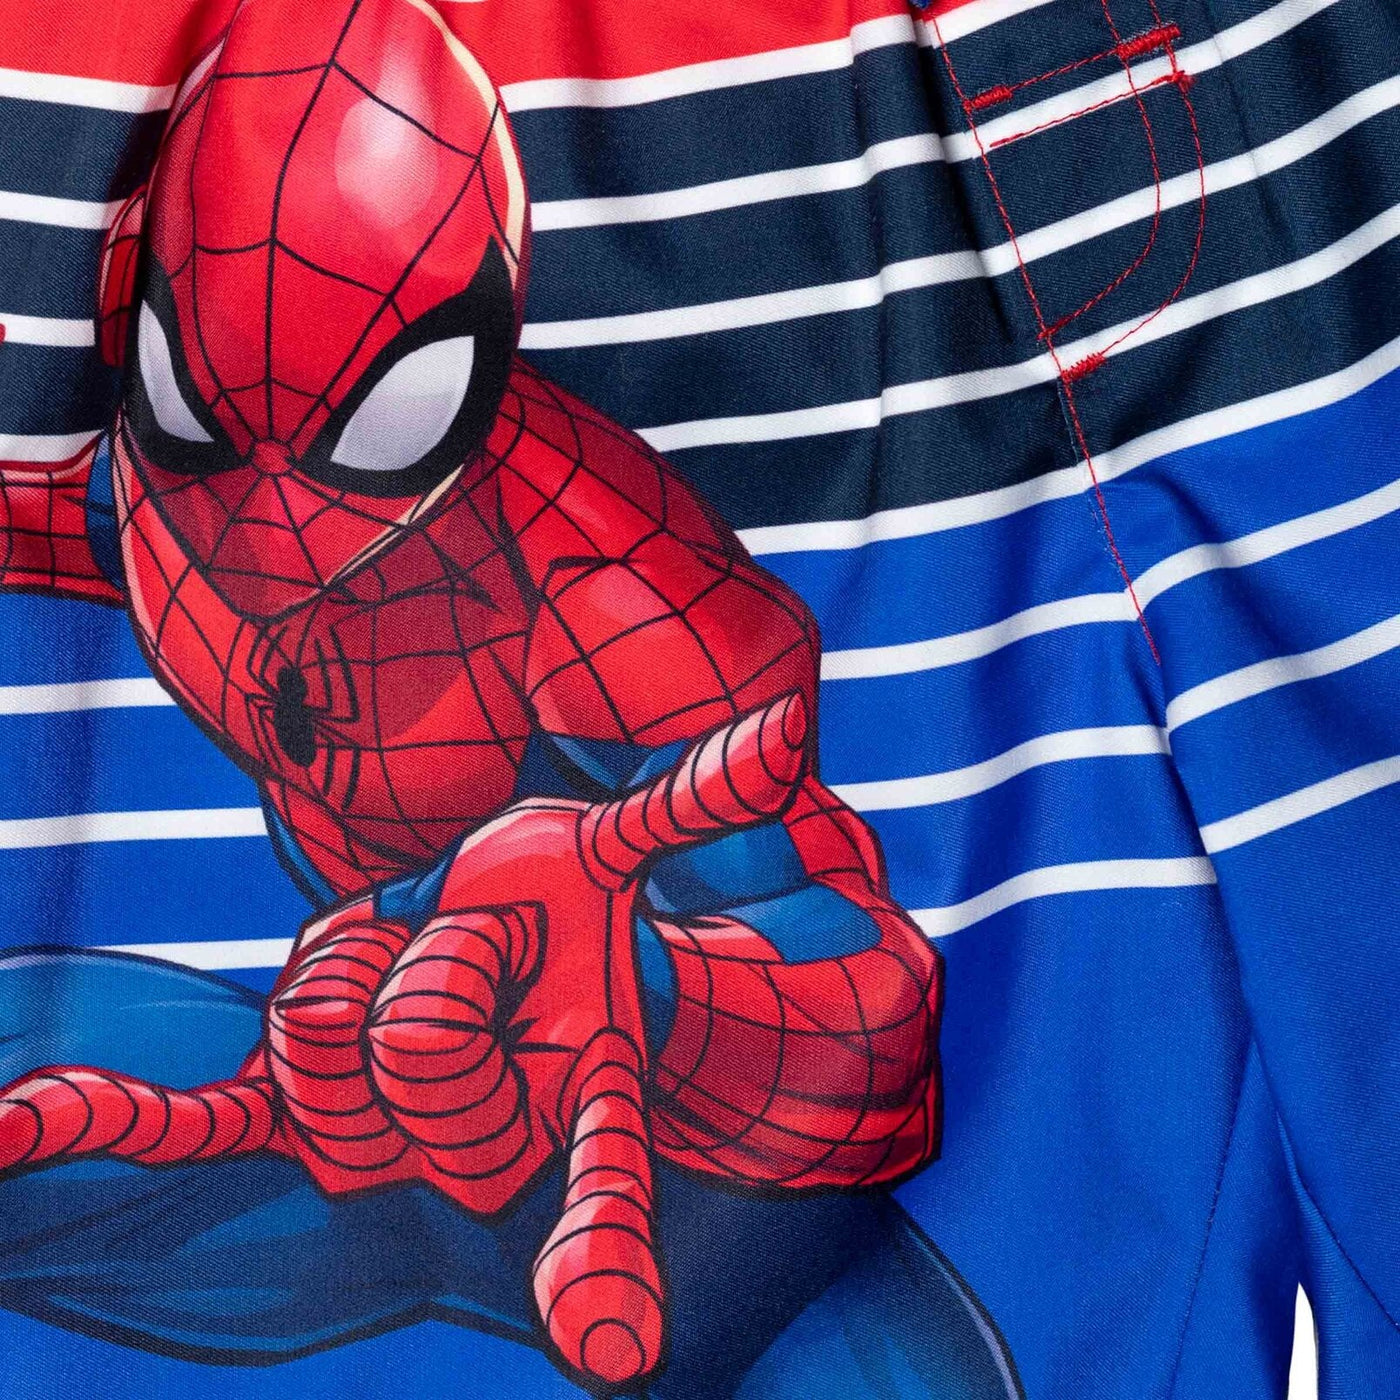 Marvel Spider - Man Toddler Boys Rash Guard and Swim Trunks Outfit Set - imagikids